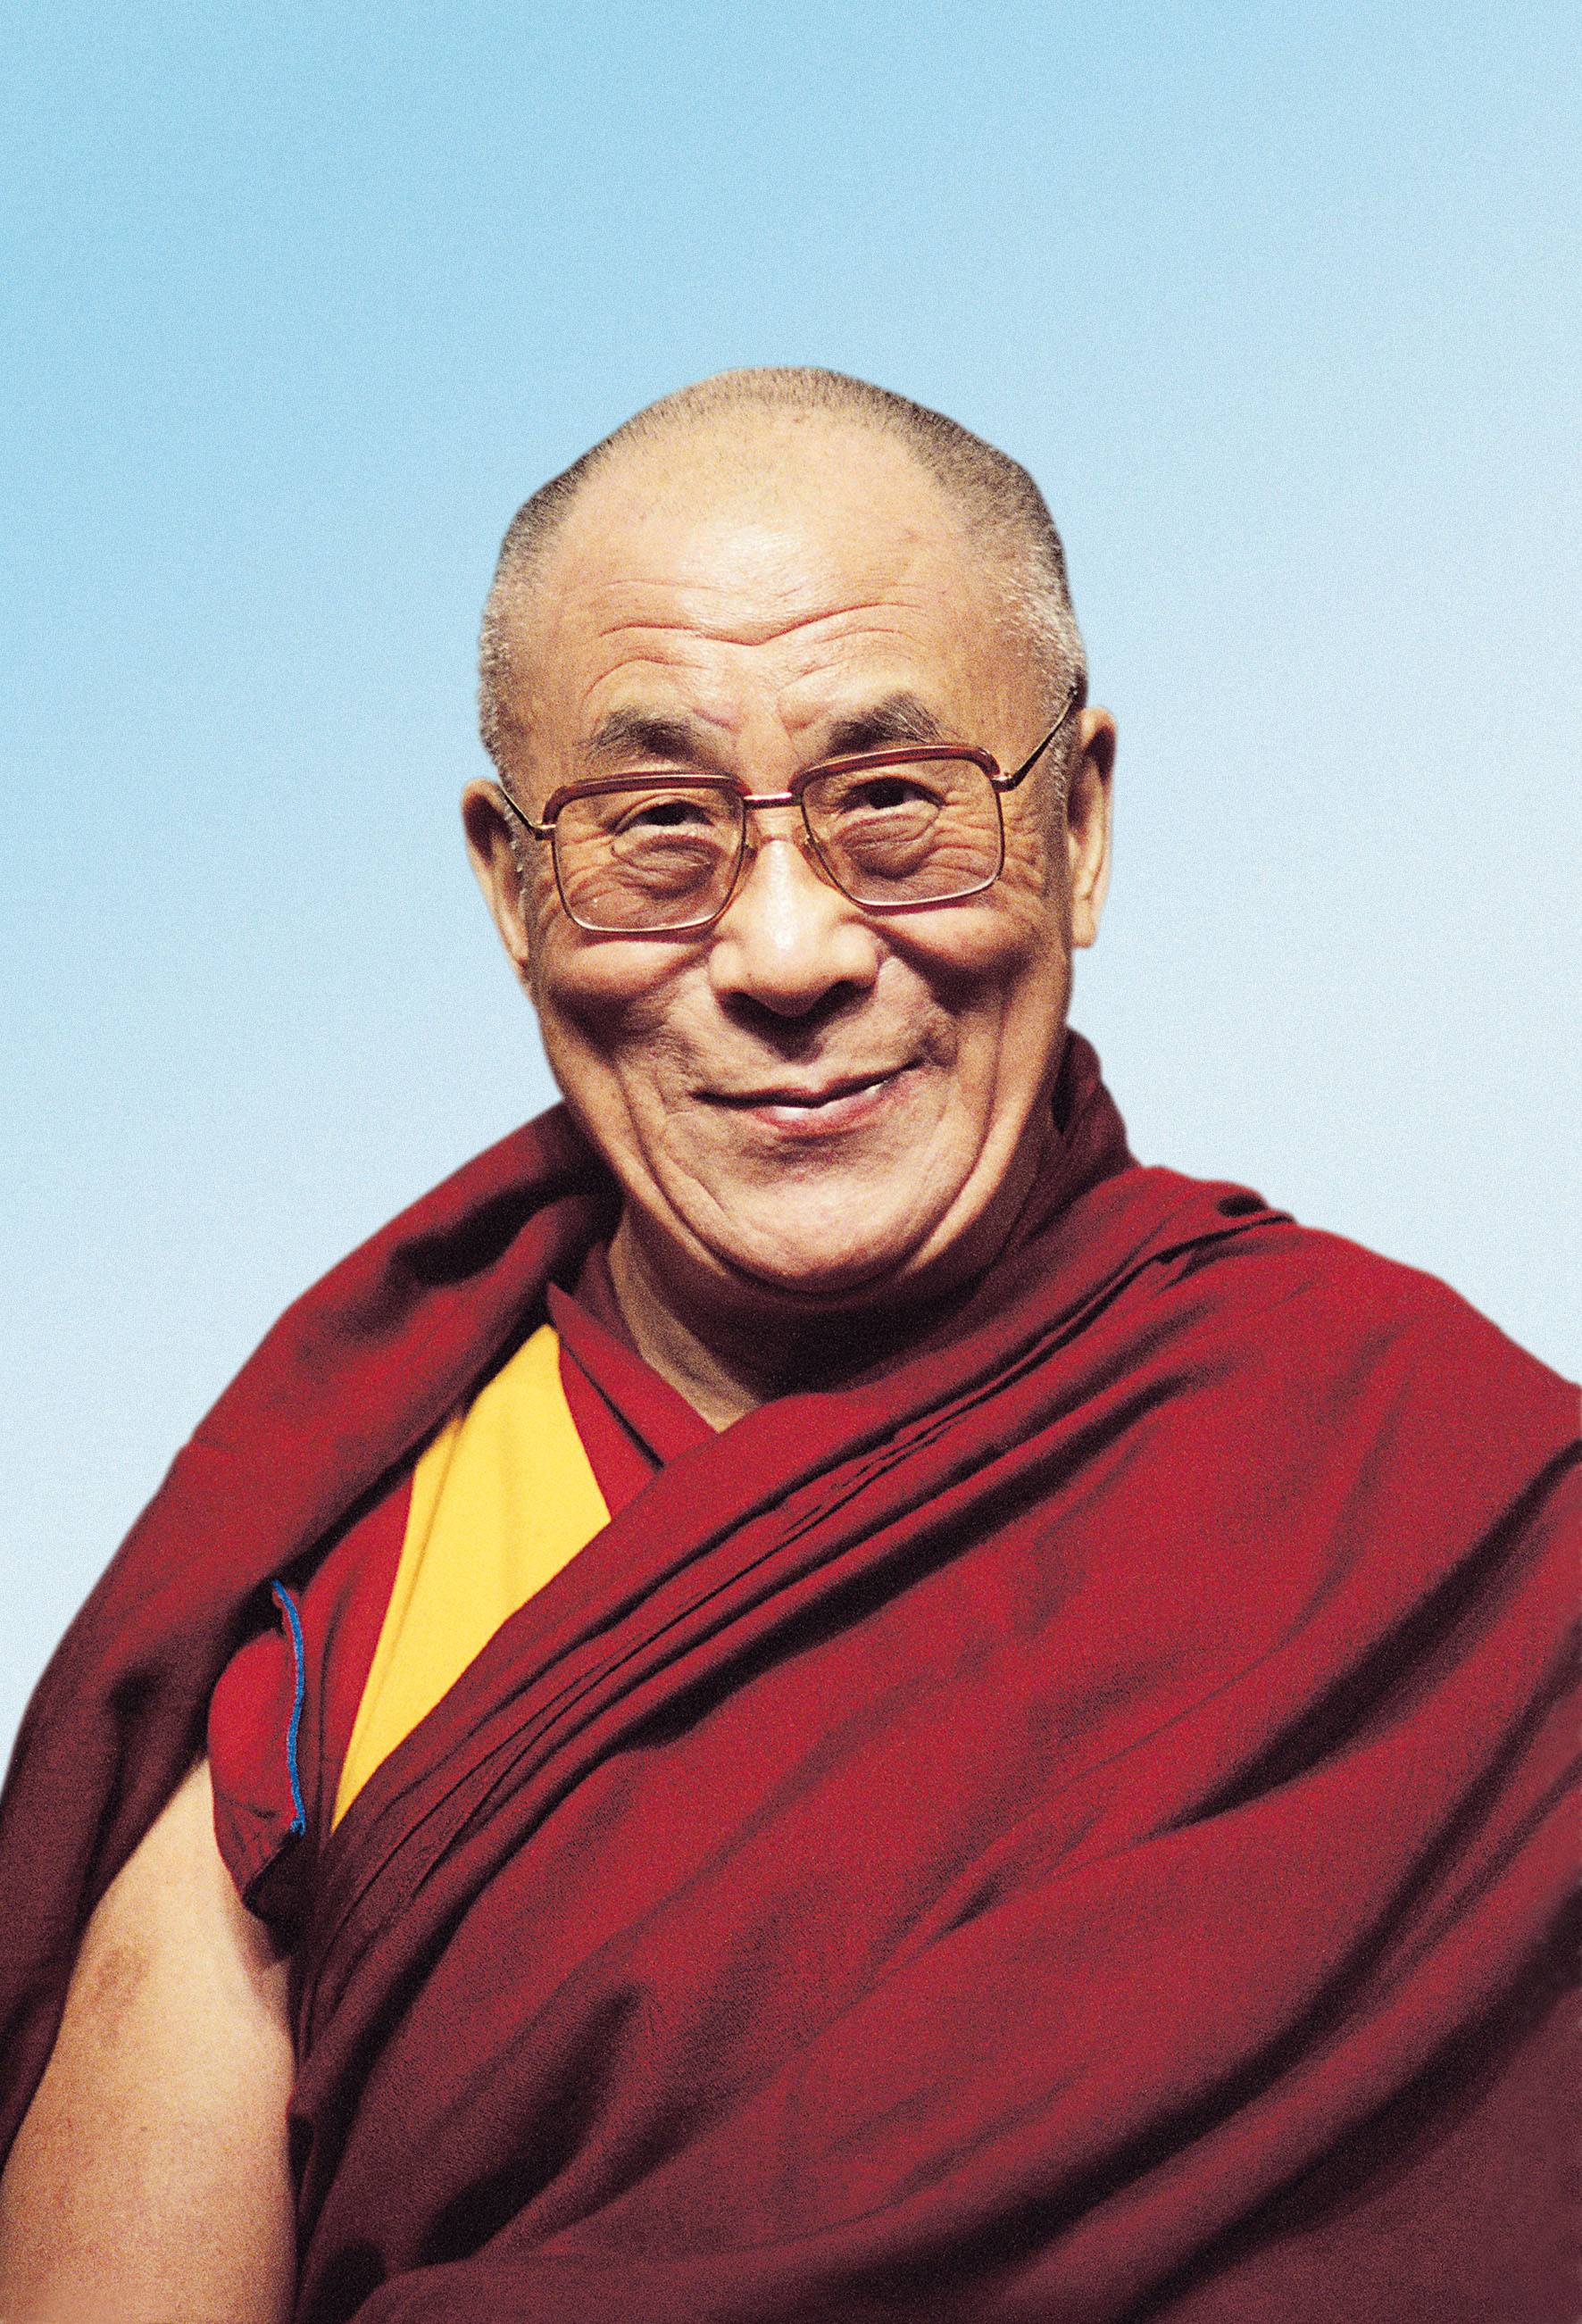 The Dalai Lama Photo HD Wallpaper Picture. Top Celebrities Photo